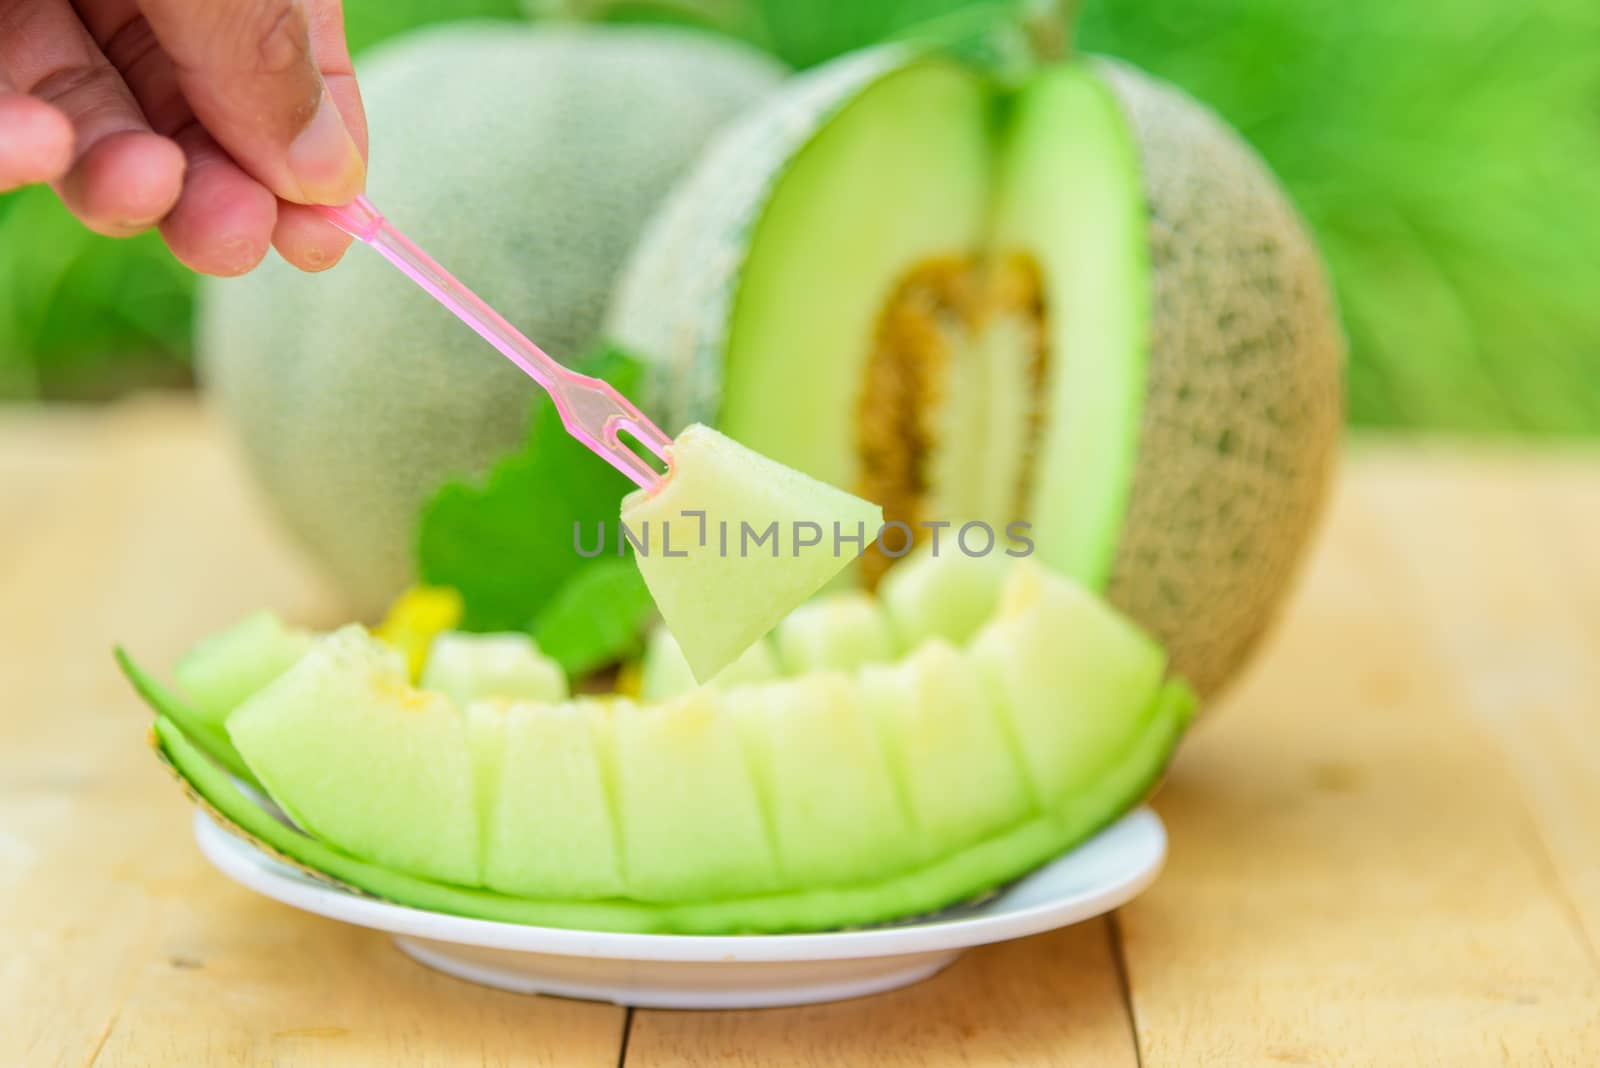 a piece of fresh green melon by rukawajung